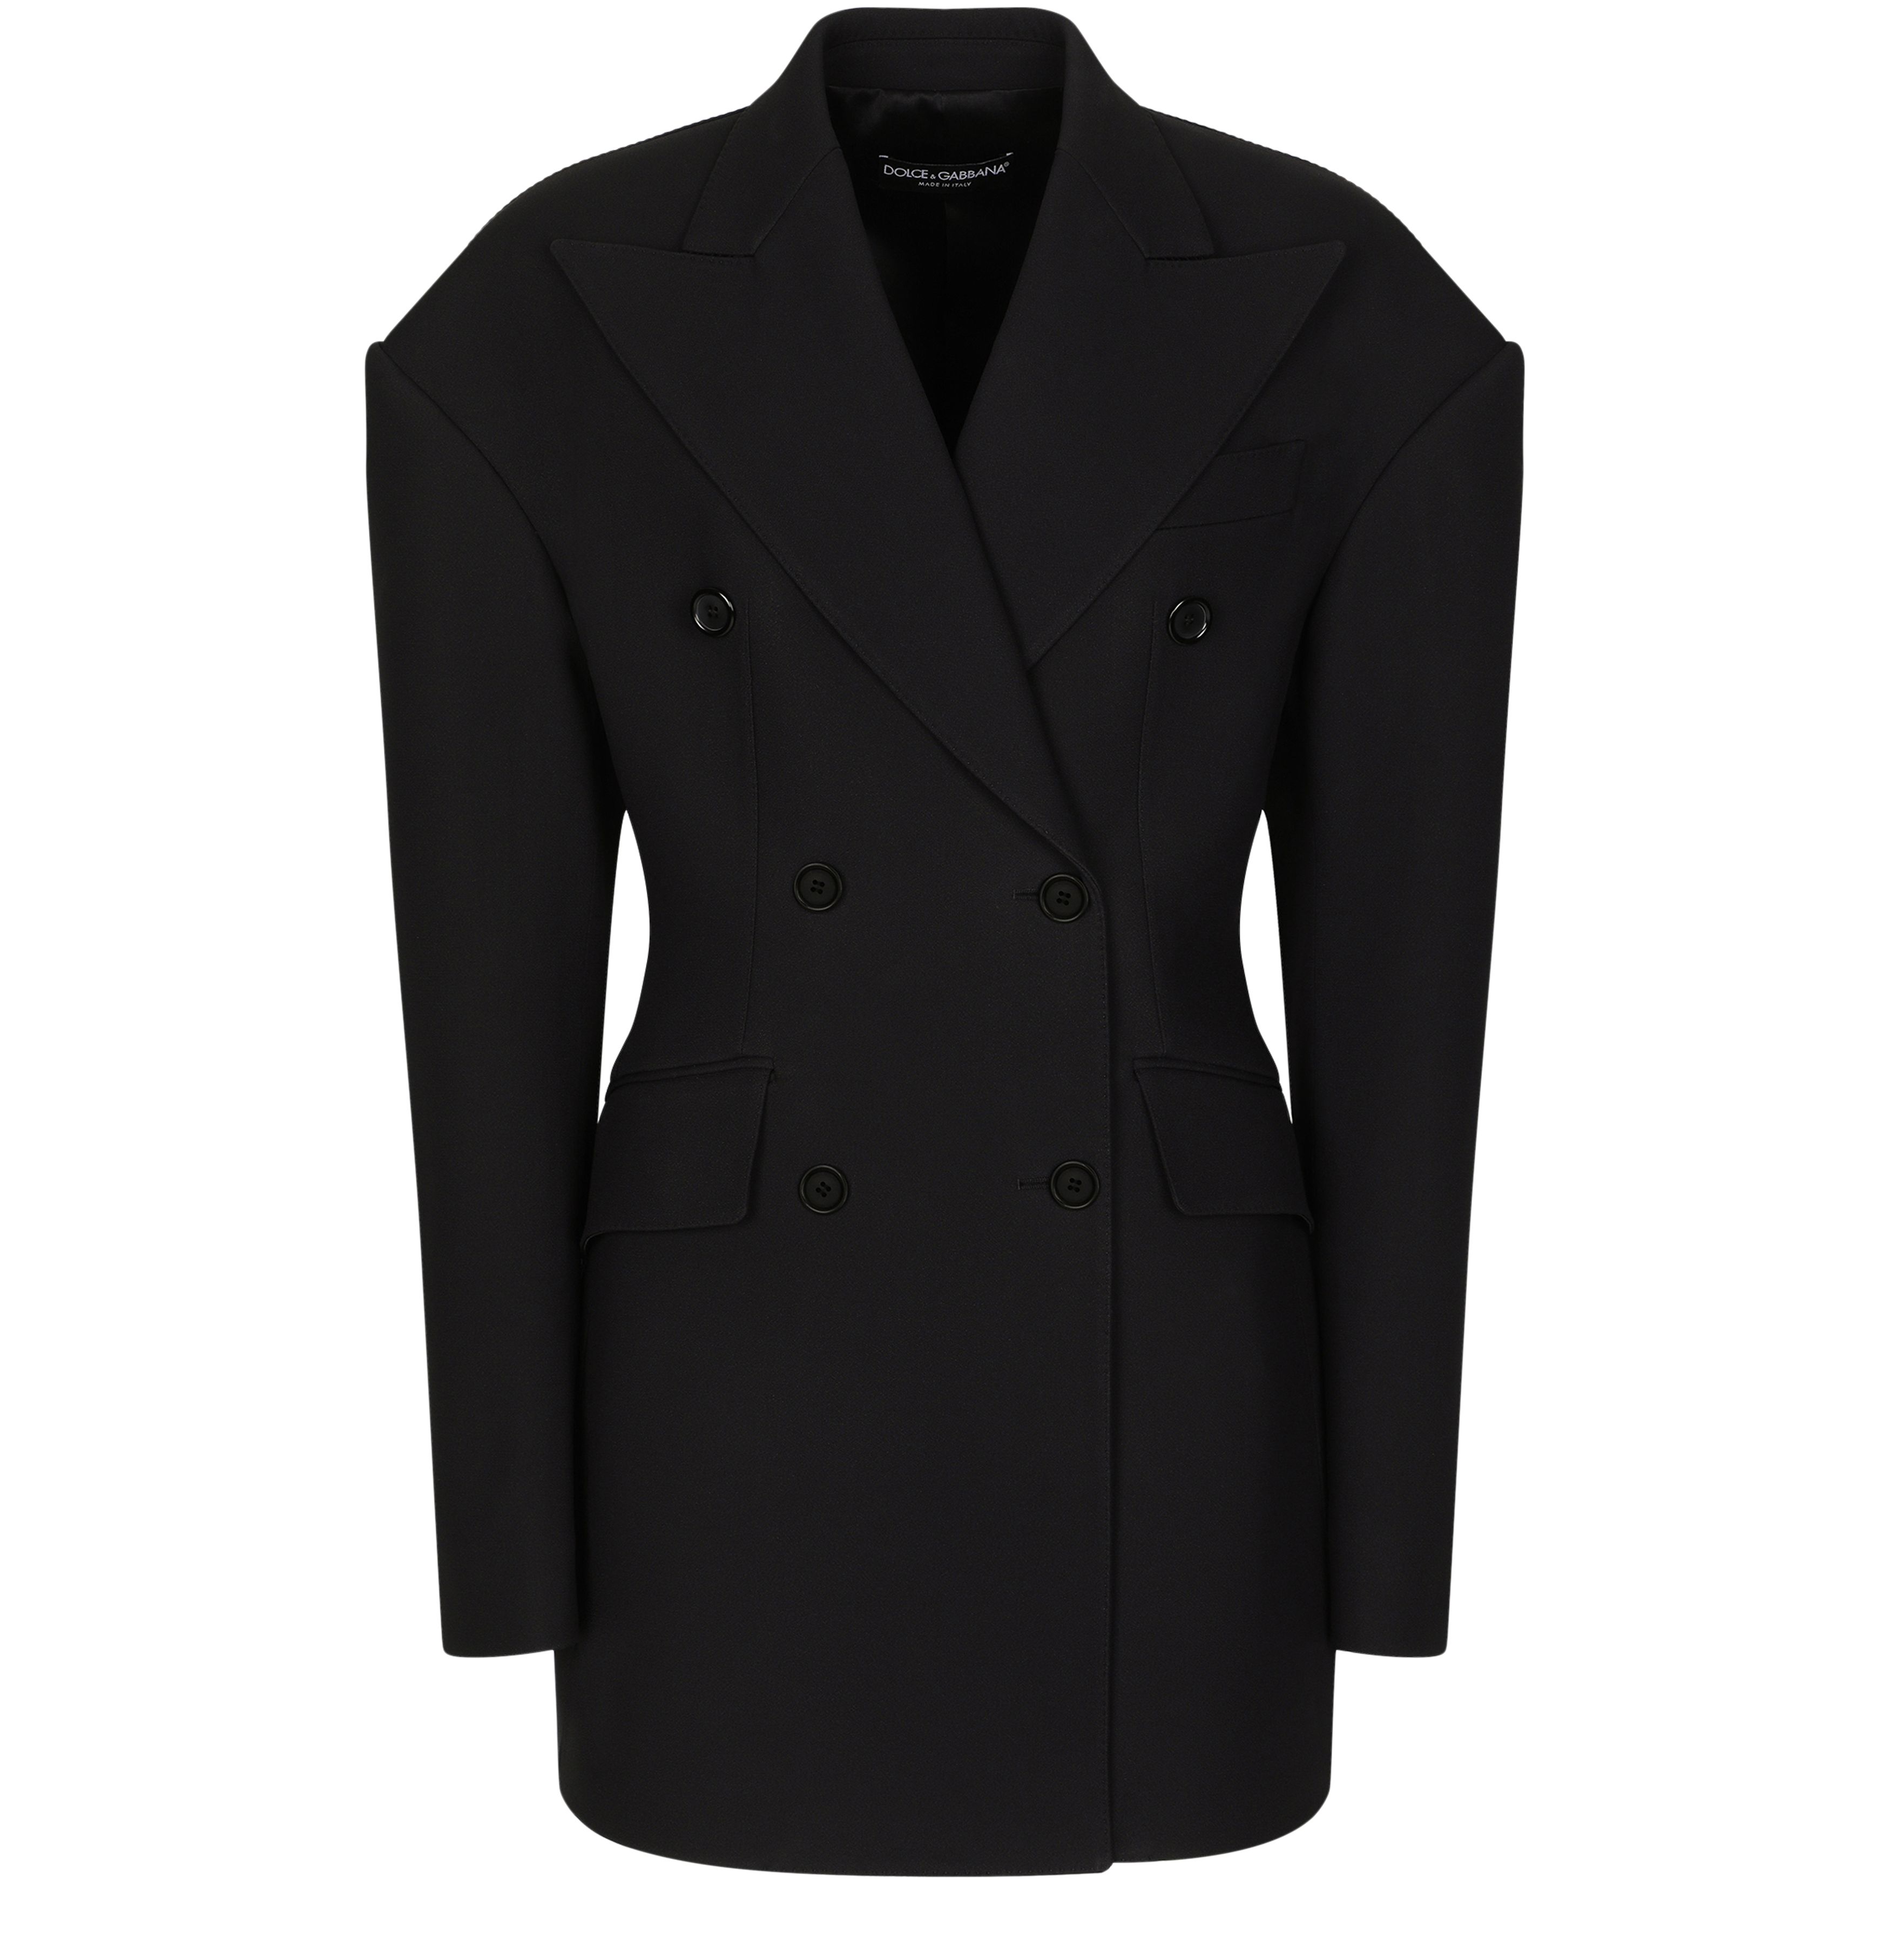 Dolce & Gabbana Technical crepe jacket